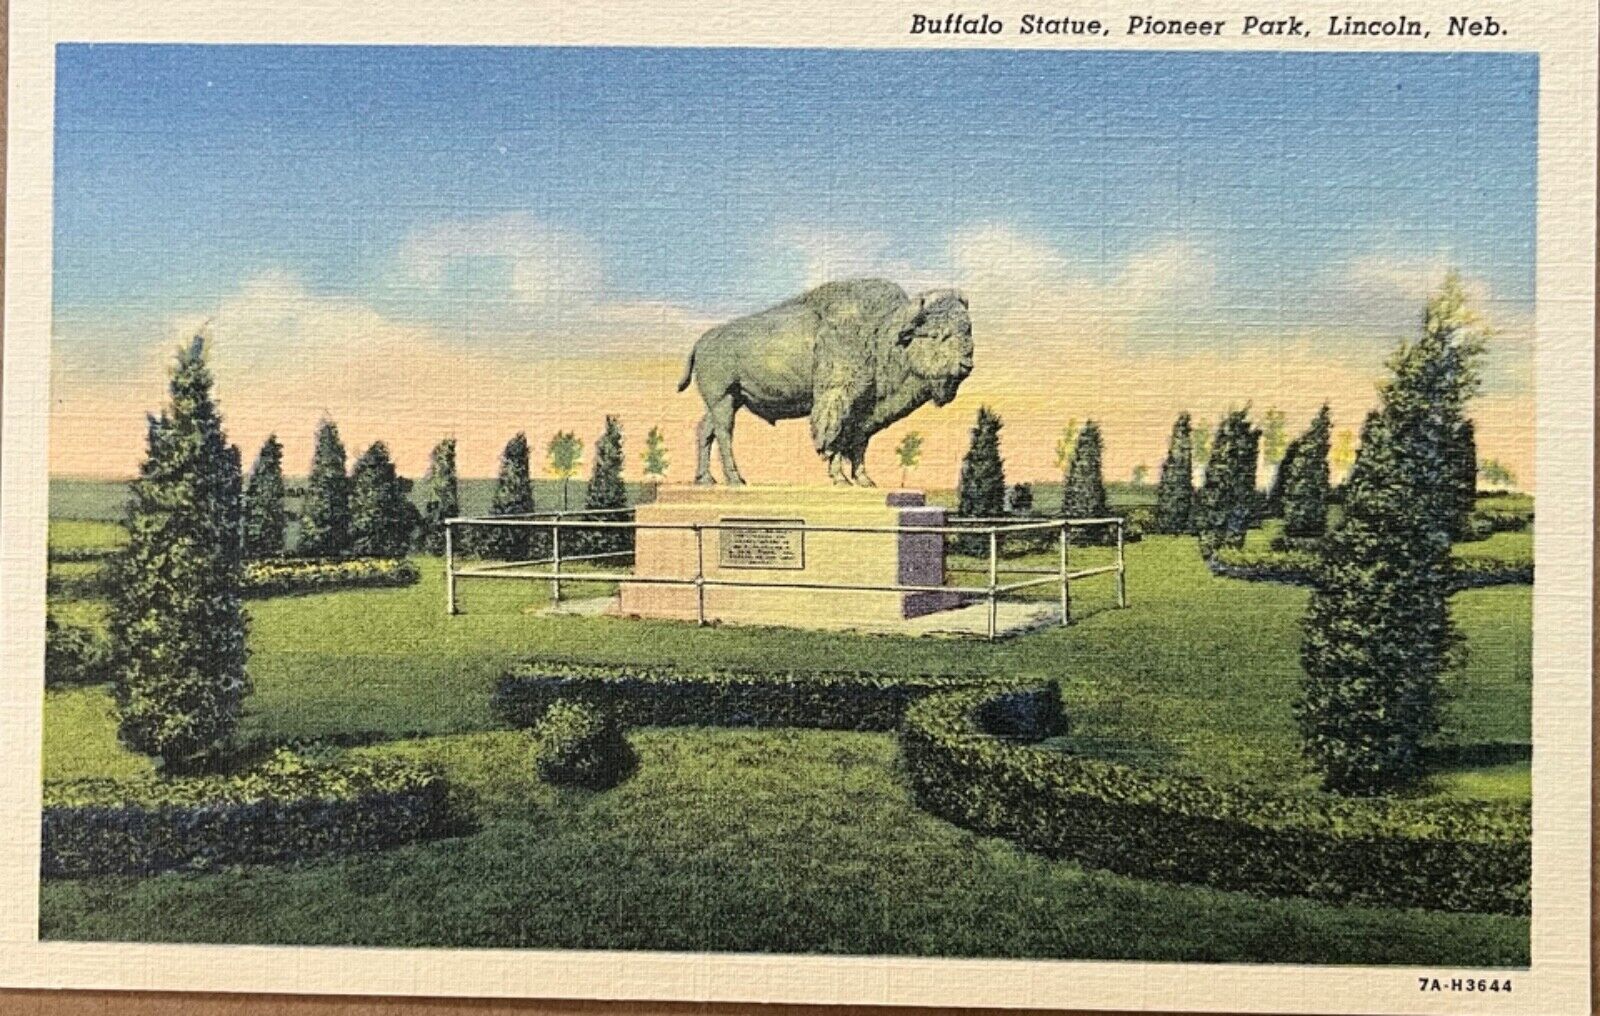 Lincoln Nebraska Buffalo Statue Pioneer Park Postcard c1930